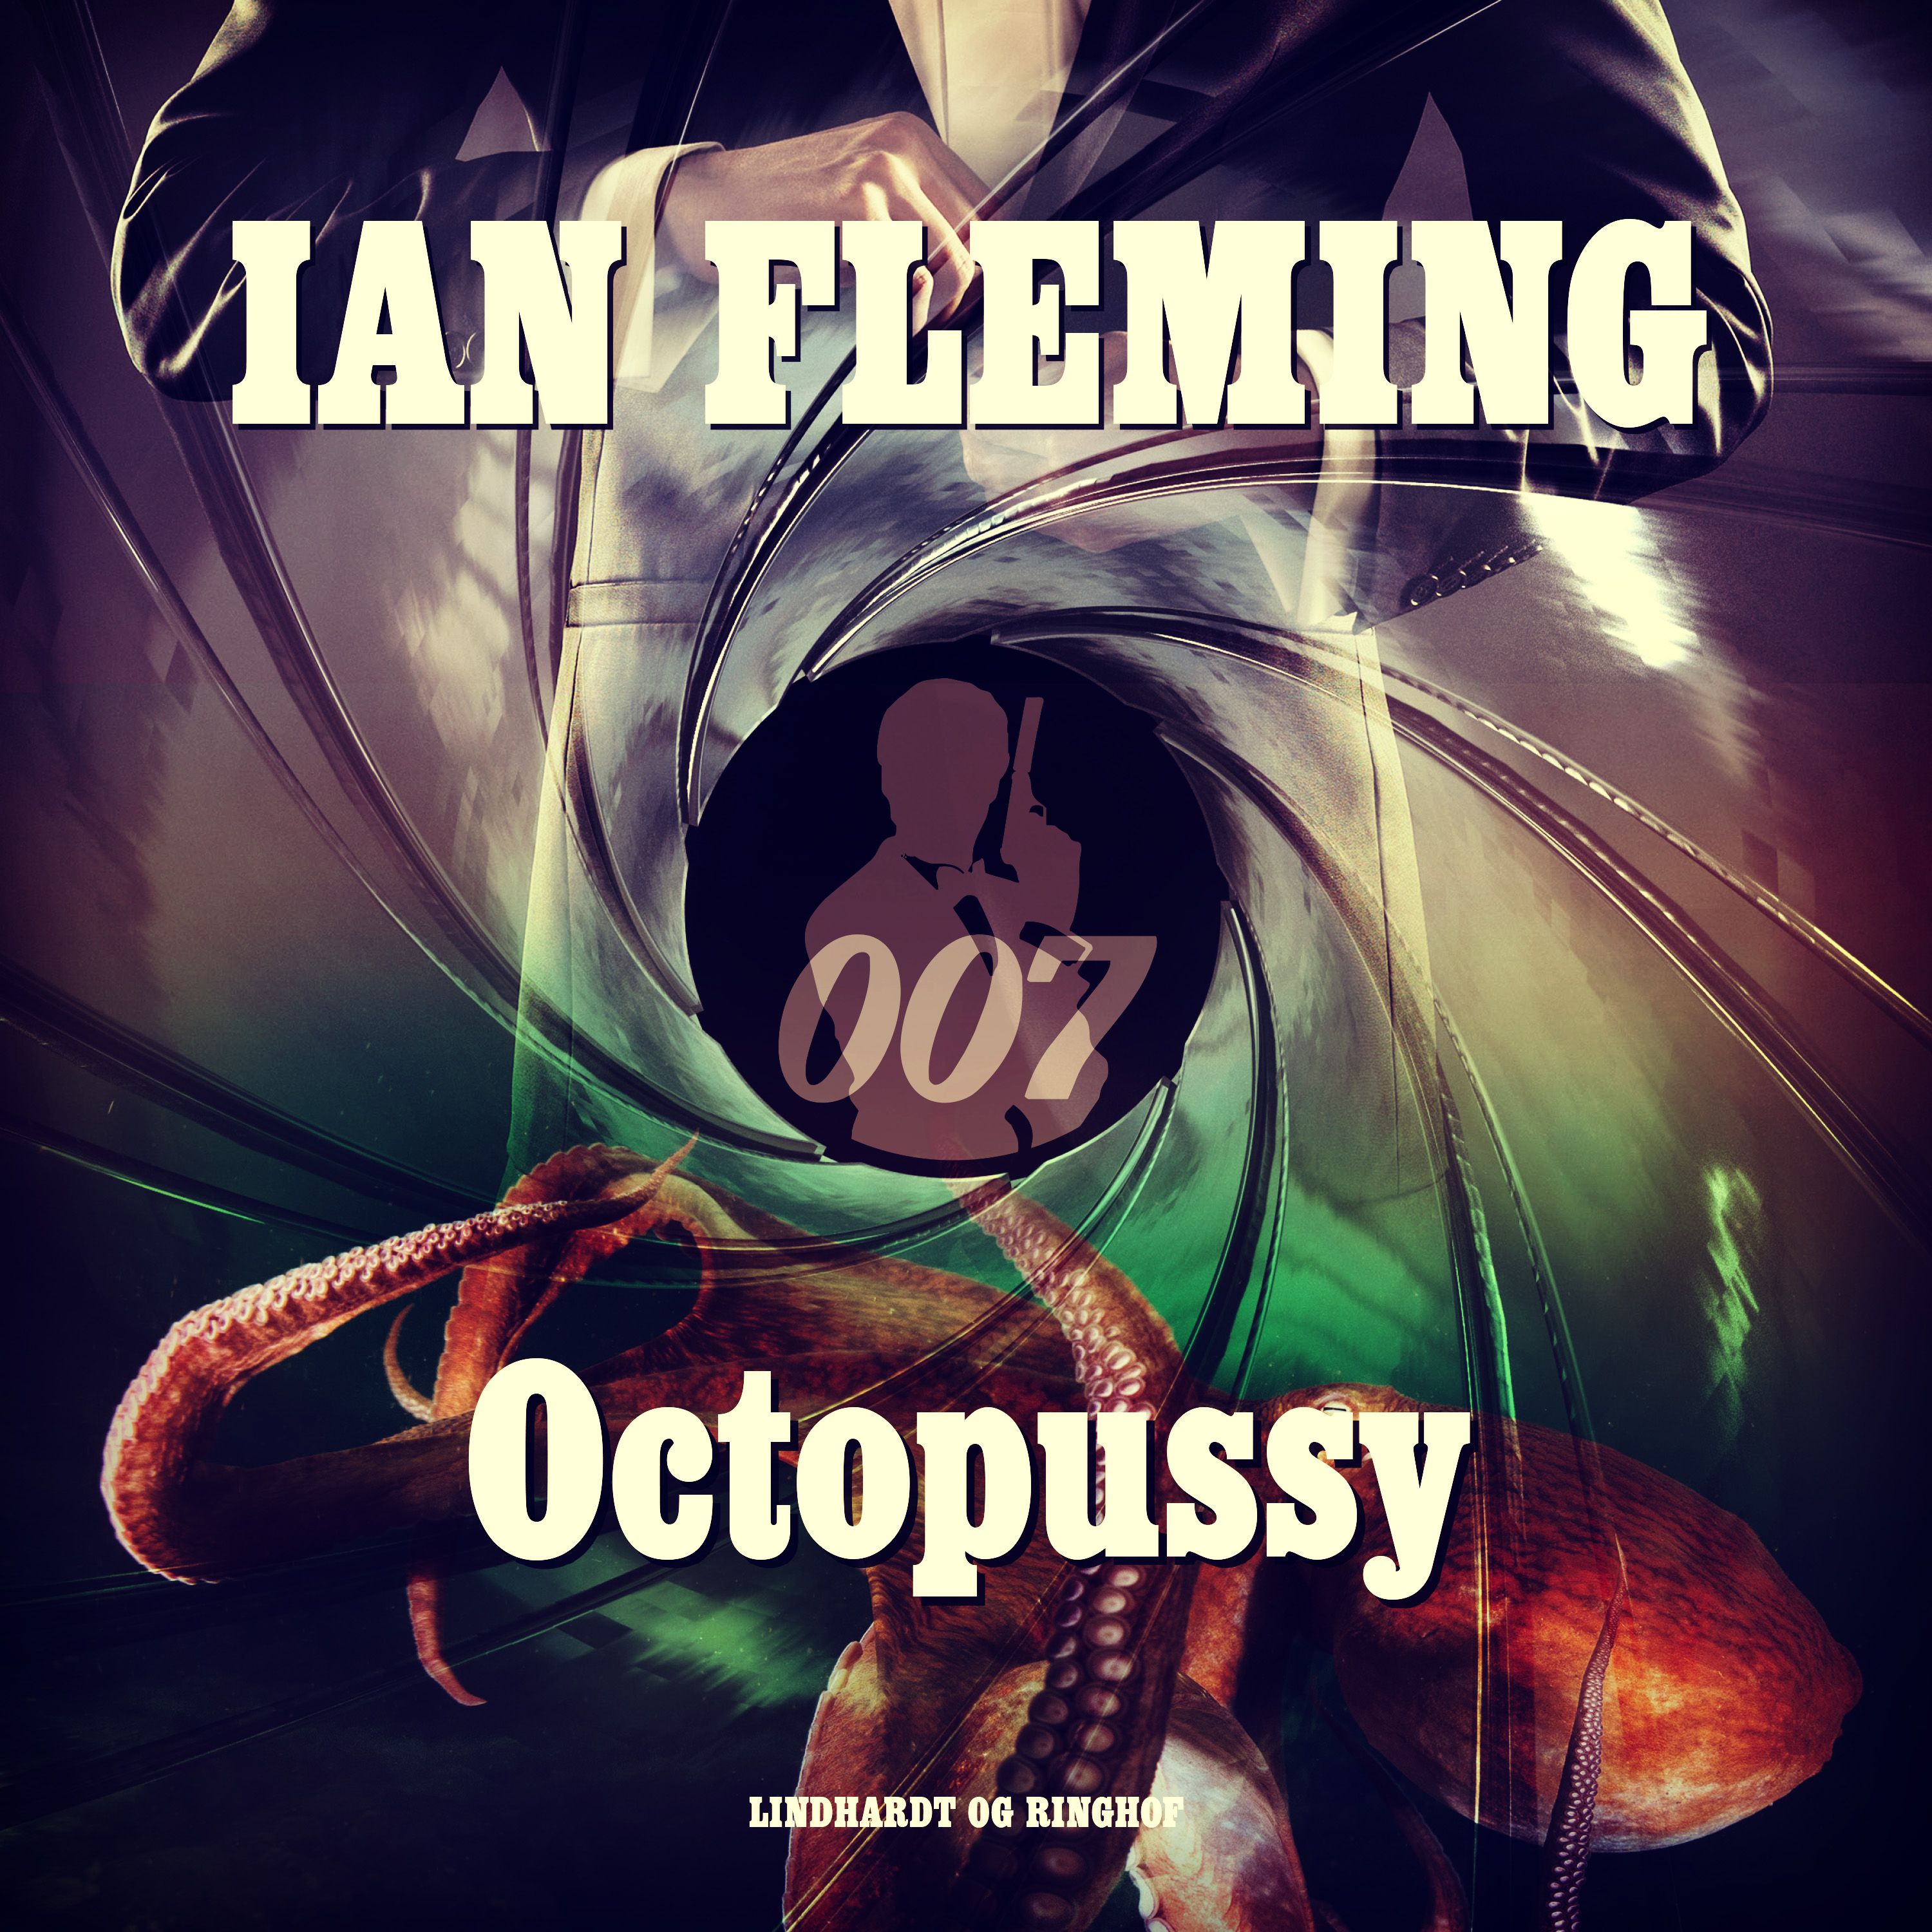 Octopussy, lydbog af Ian Fleming